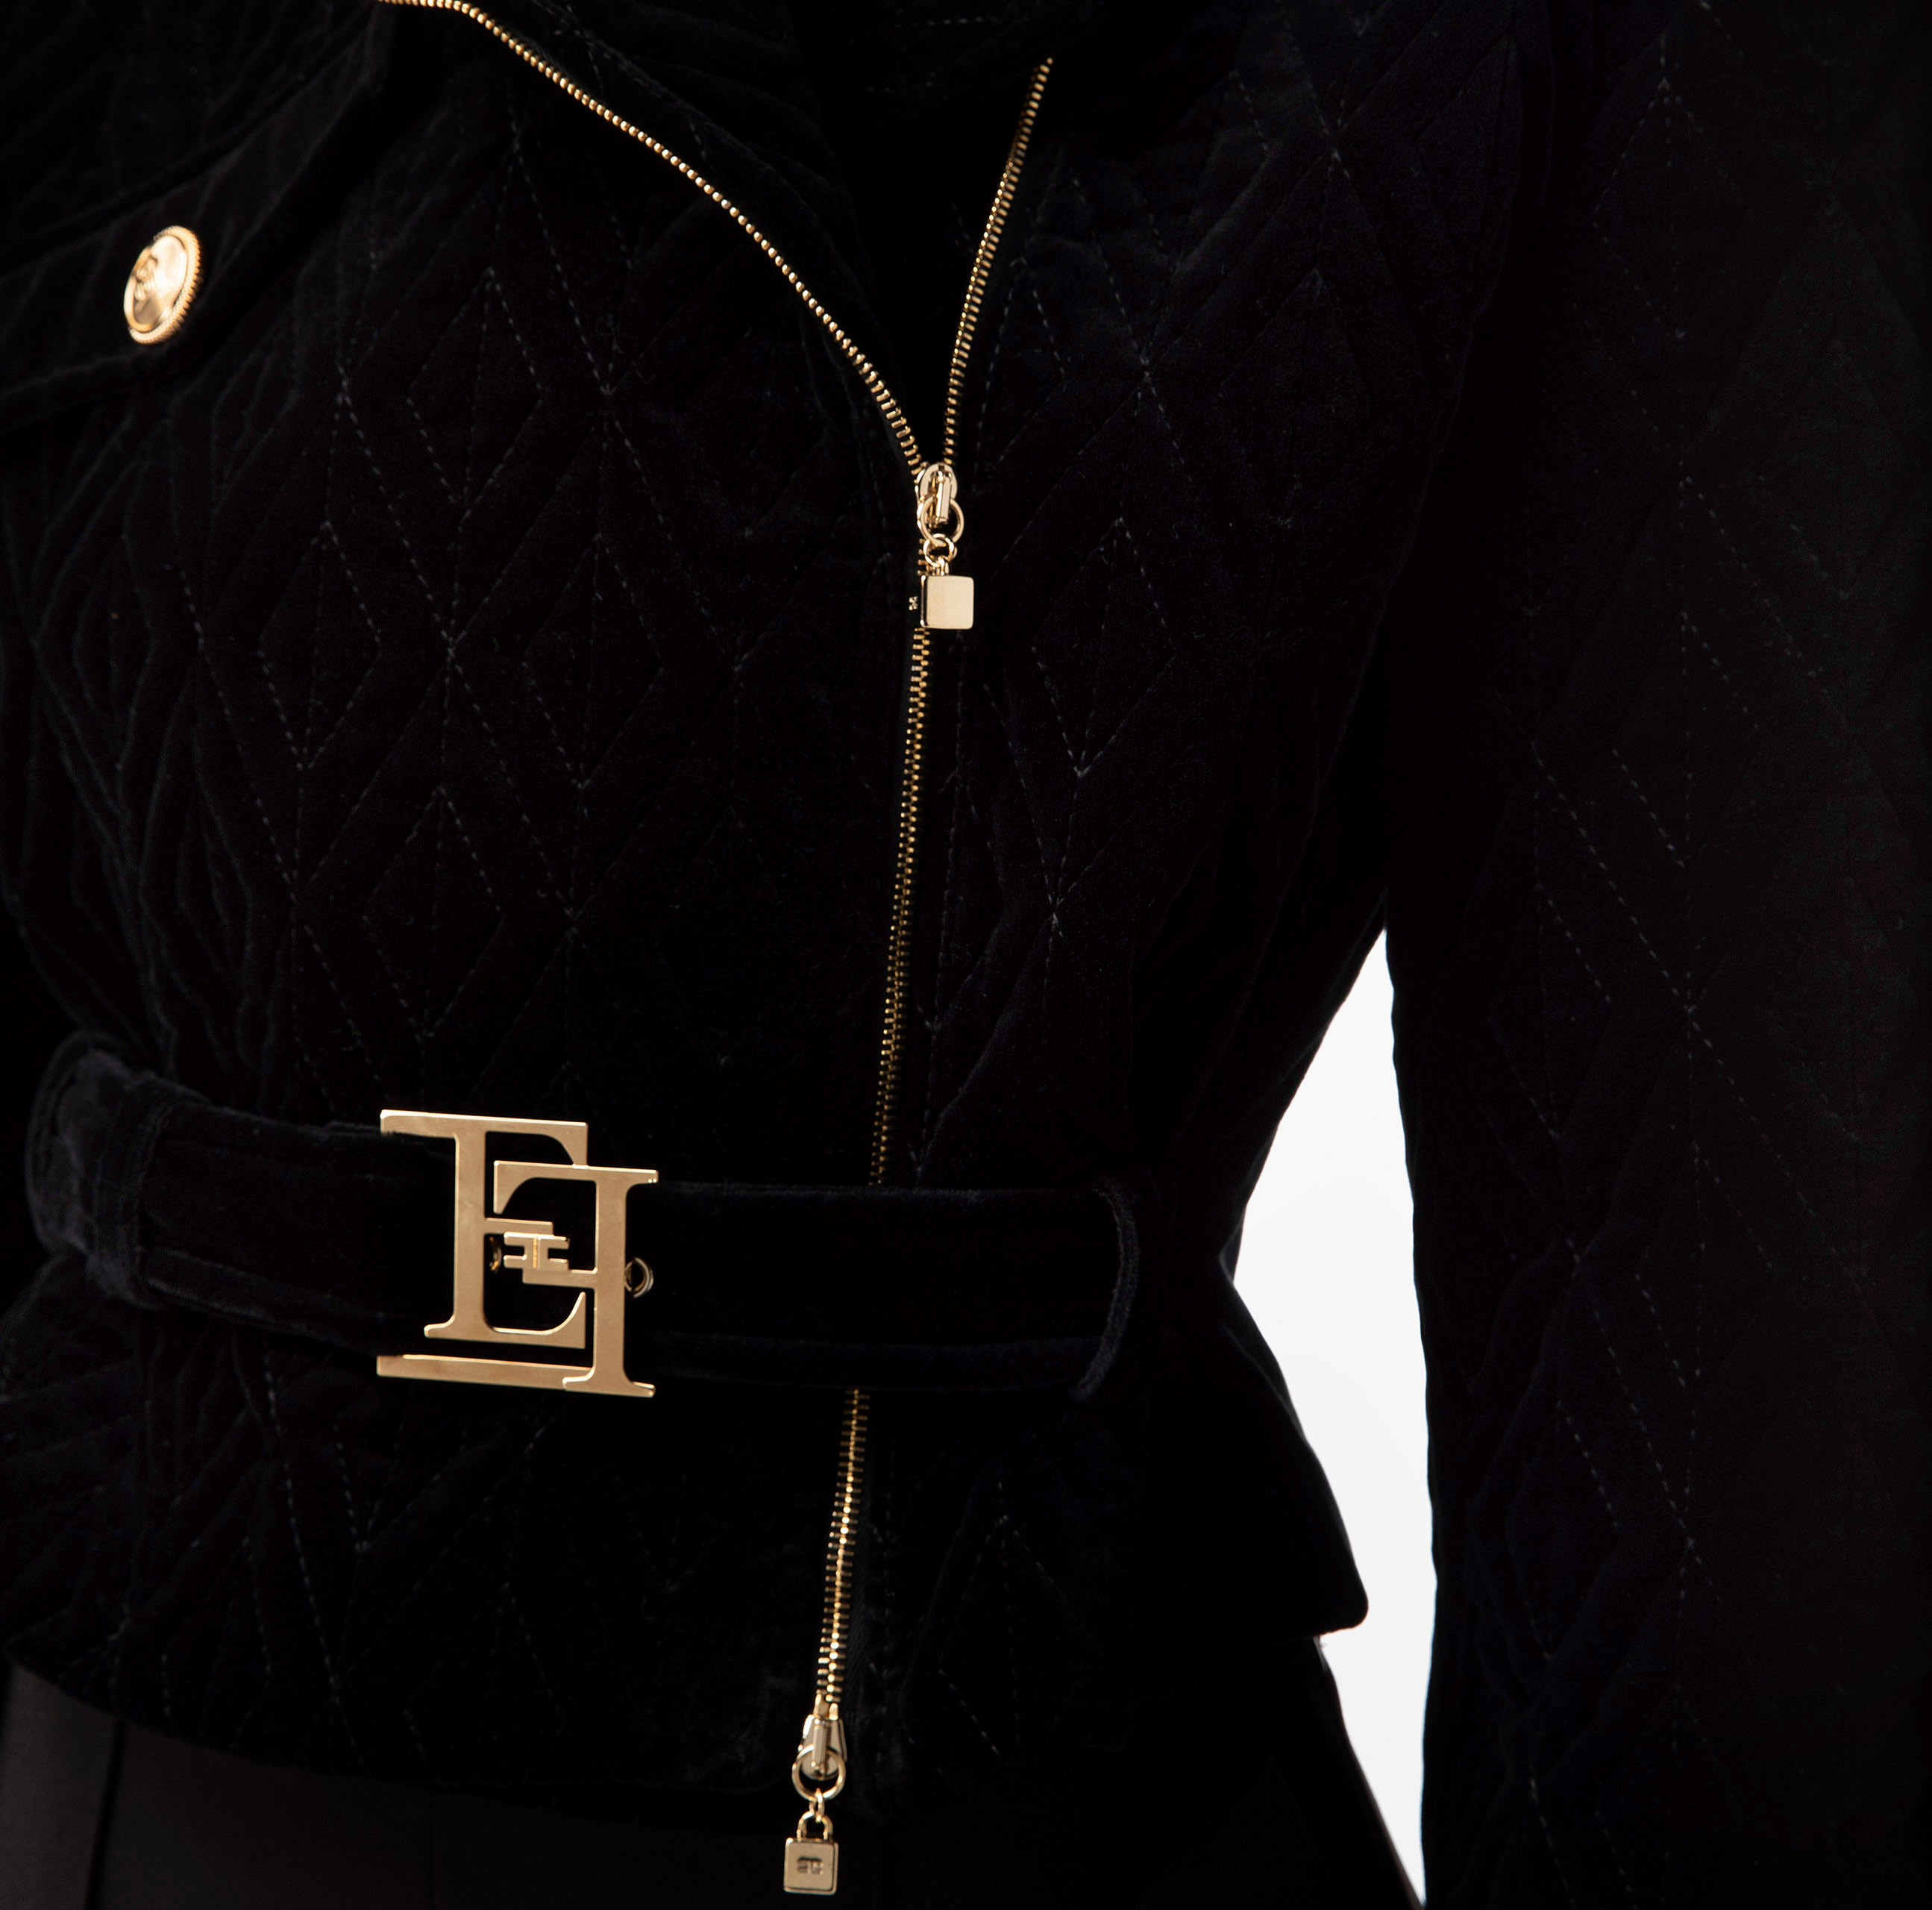 Crop biker jacket in embroidered velvet fabric - Elisabetta Franchi